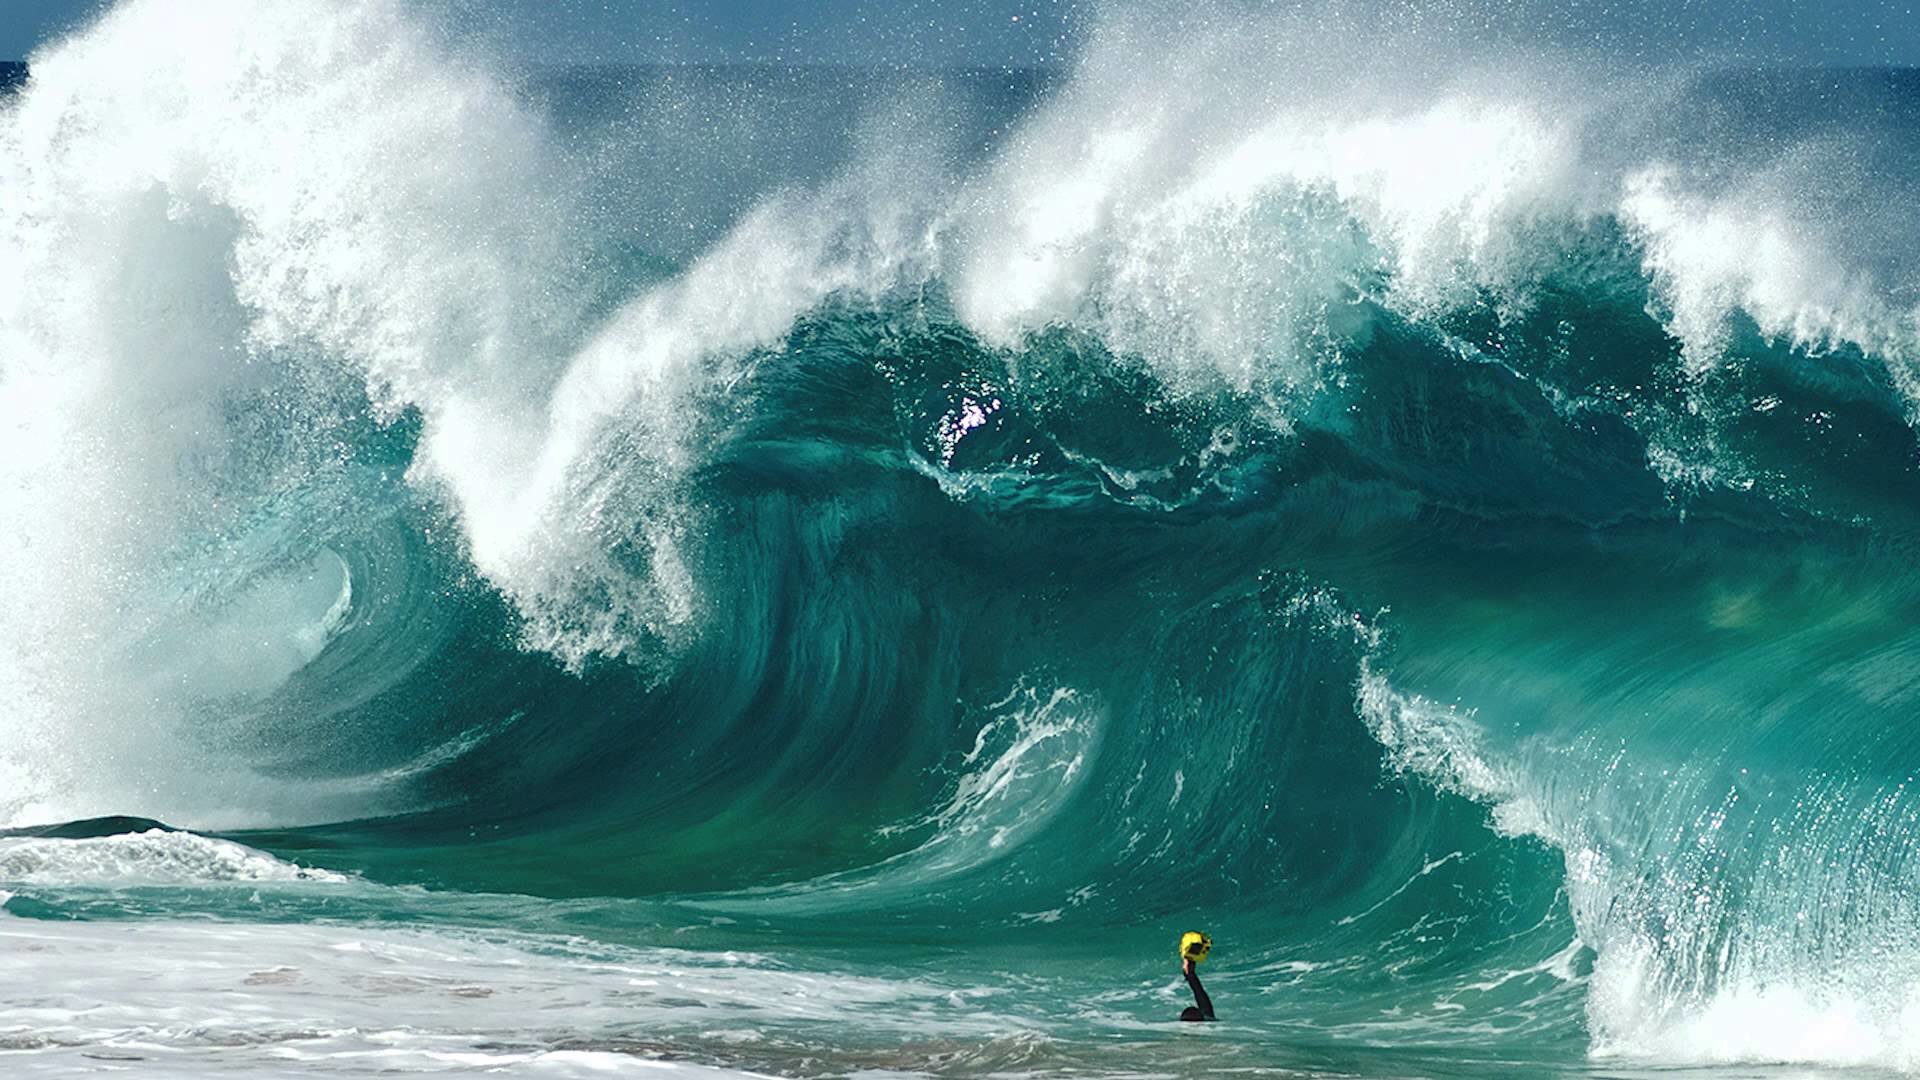 Surf Photographer Clark Little on Staring Down Shorebreak to Get the Perfect Shot. Inspiring Story